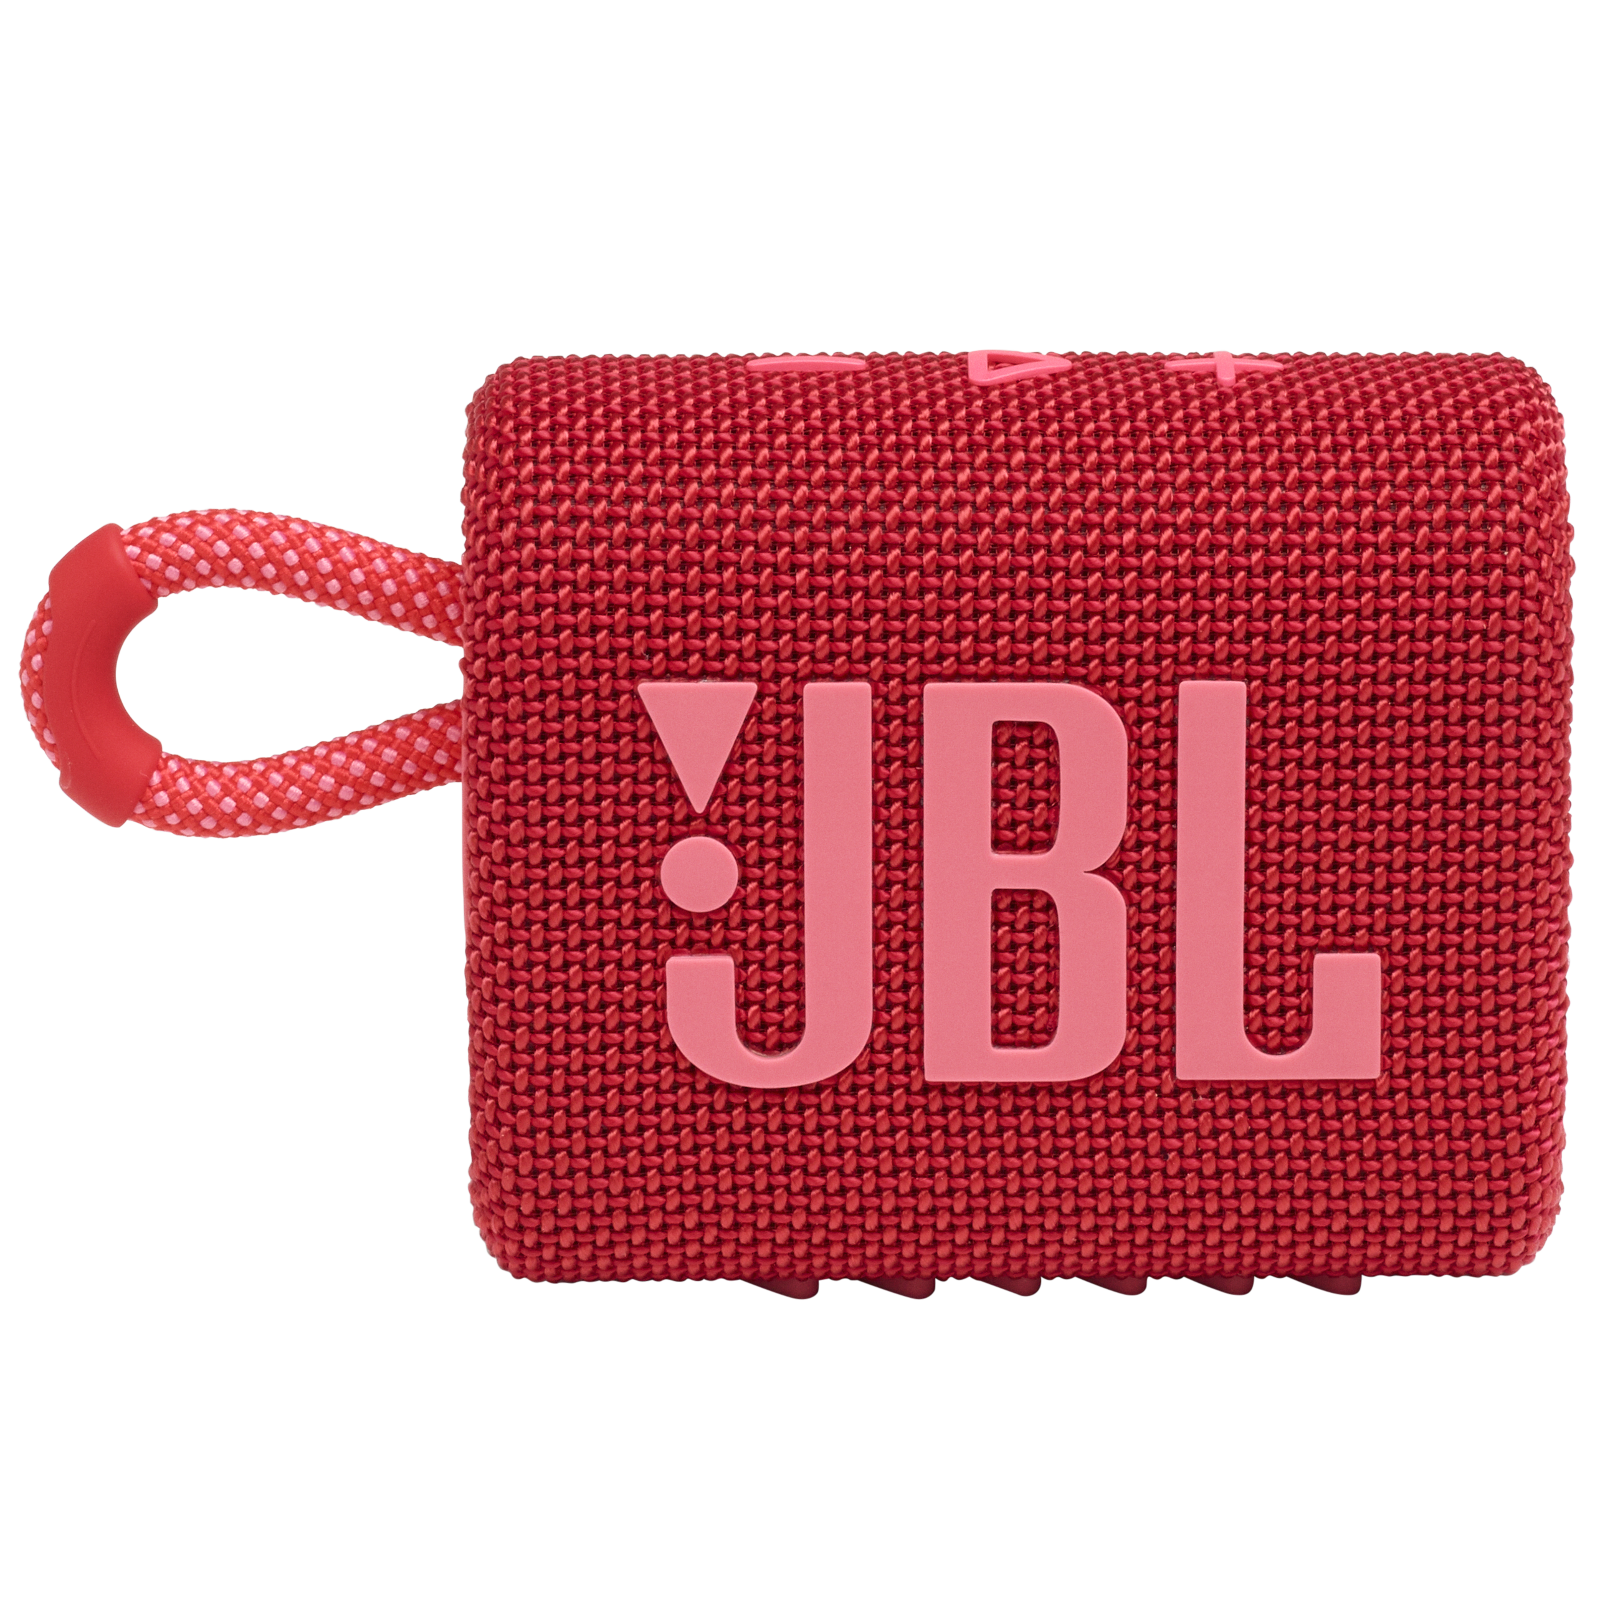 JBL Go 3 - Red - Portable Waterproof Speaker - Front